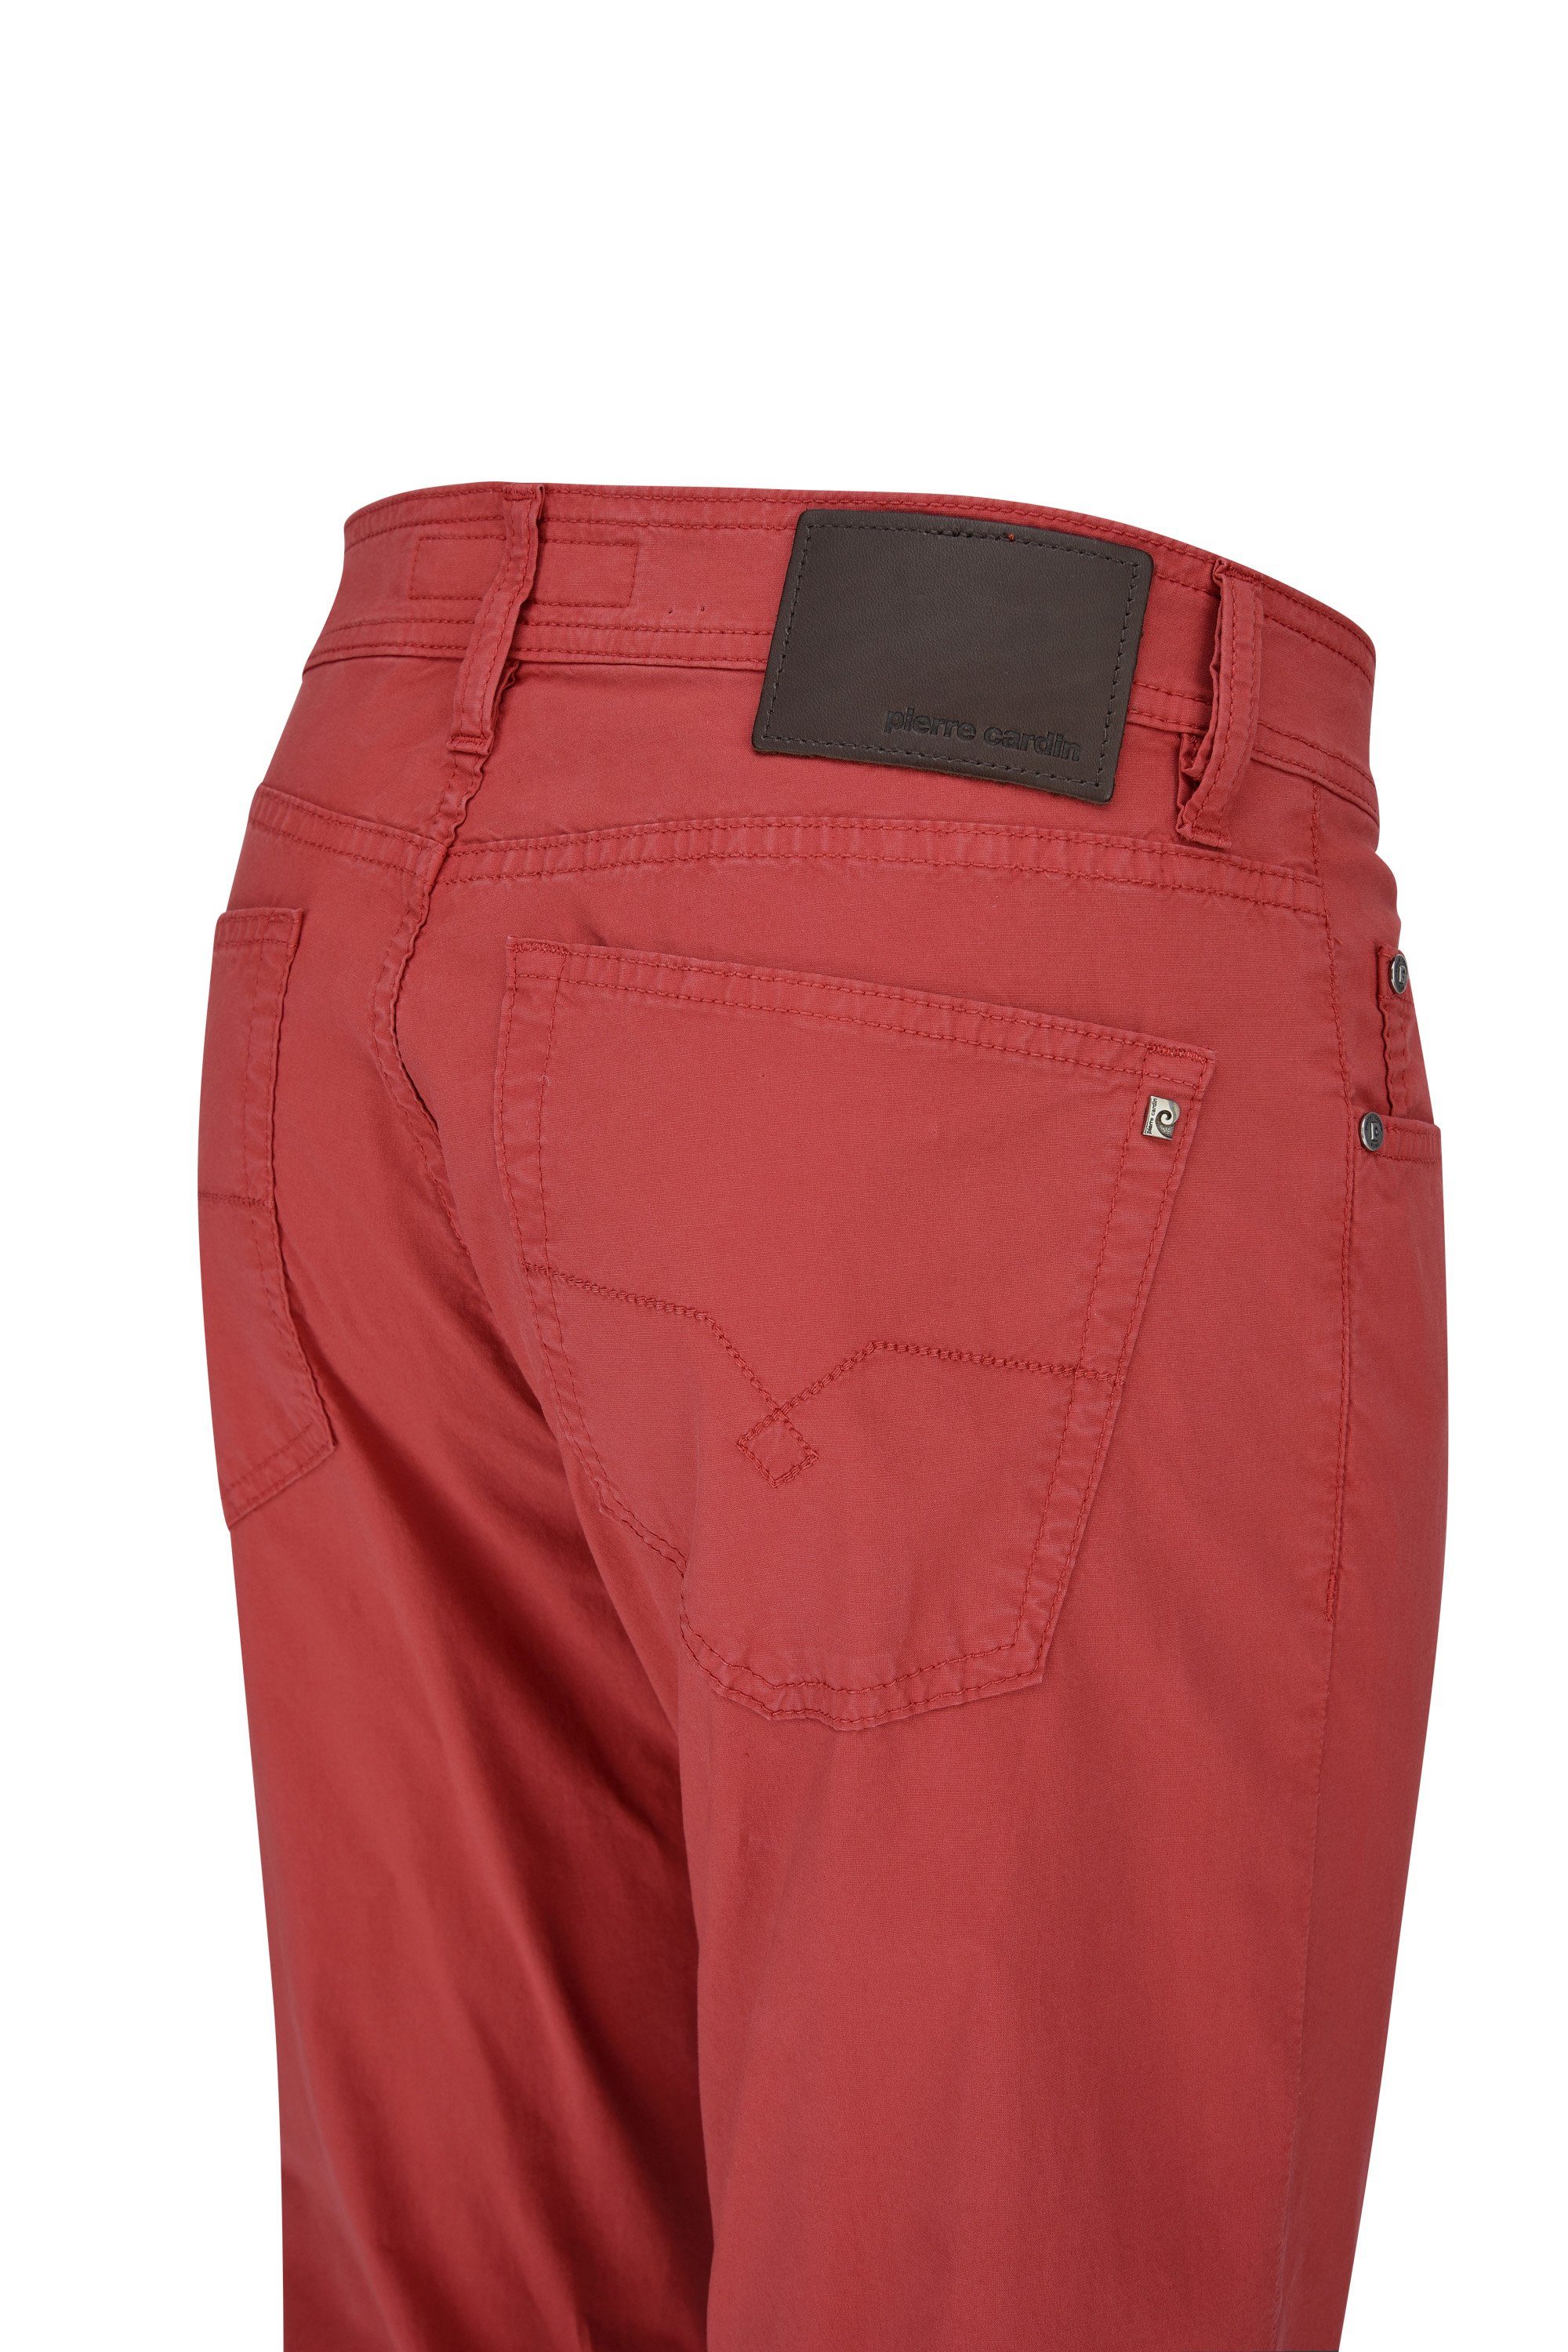 rusty 5-Pocket-Jeans Cardin 444.91 PIERRE 3196 air touch red DEAUVILLE CARDIN summer Pierre